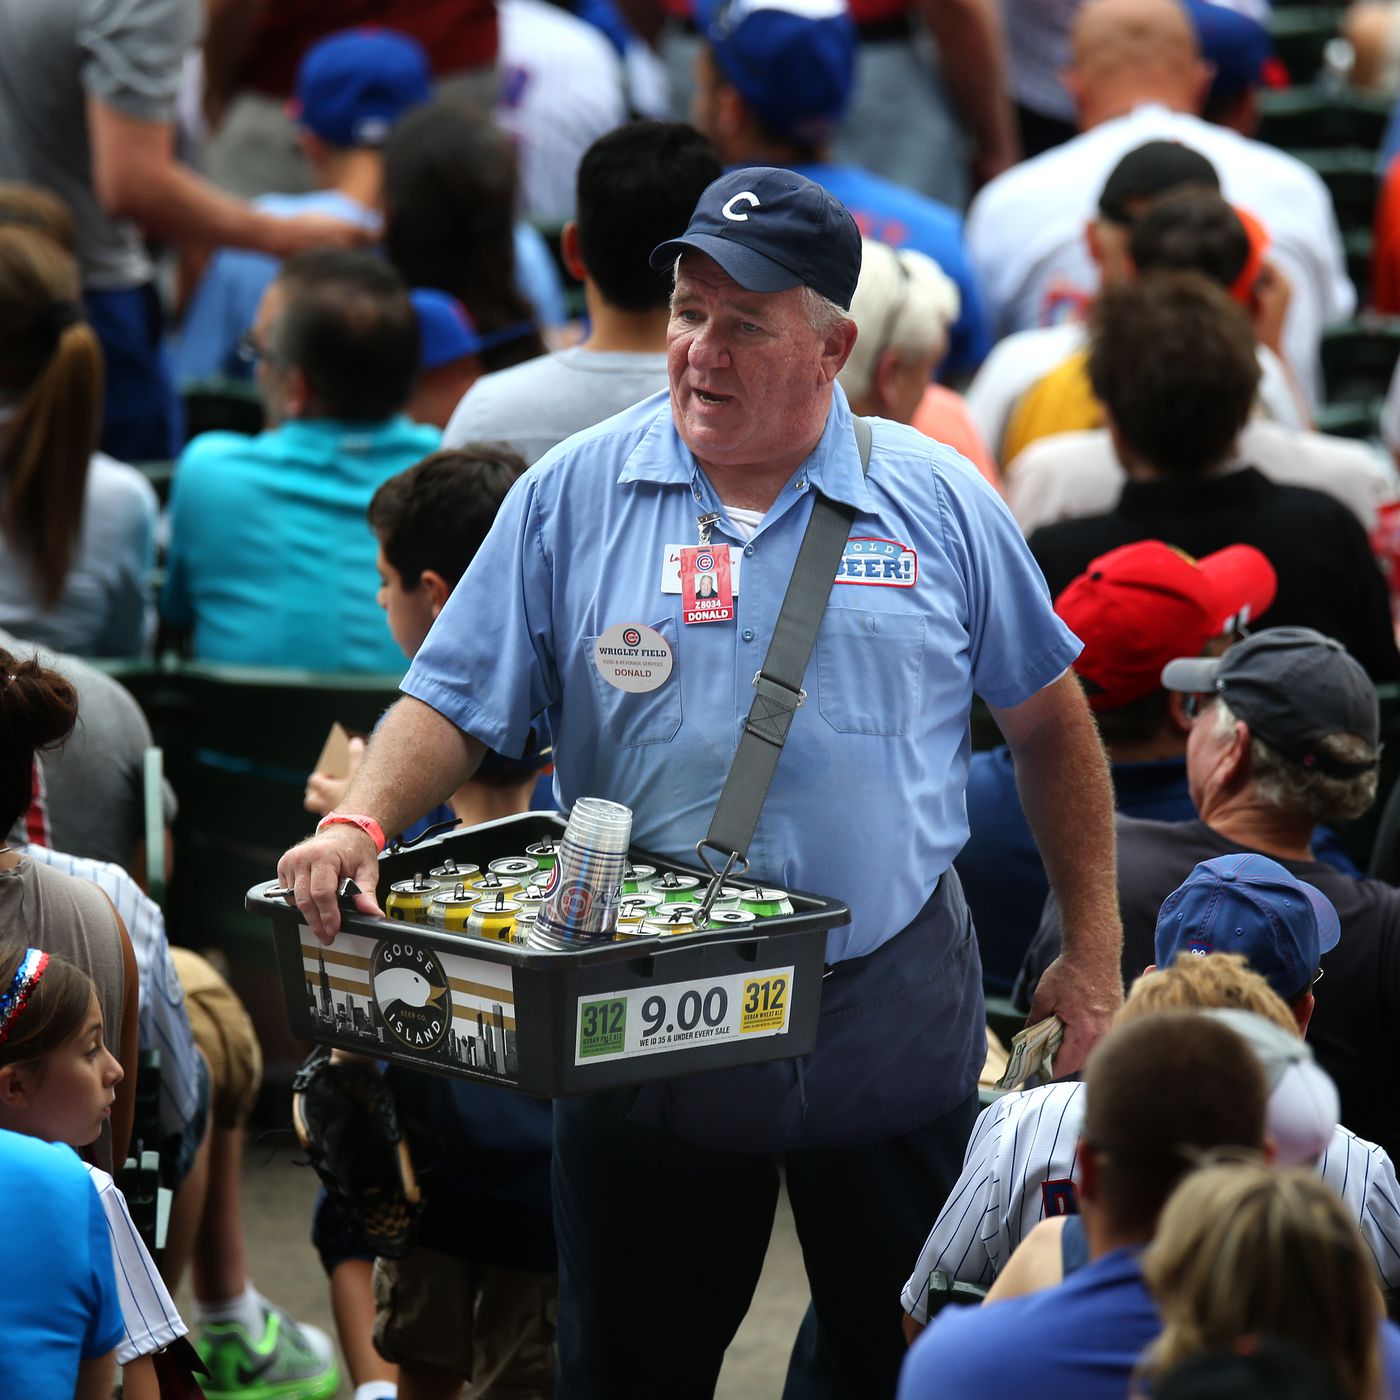 Chicago Baseball Food Vendors Left in Limbo as Fans Allowed to Return -  Eater Chicago